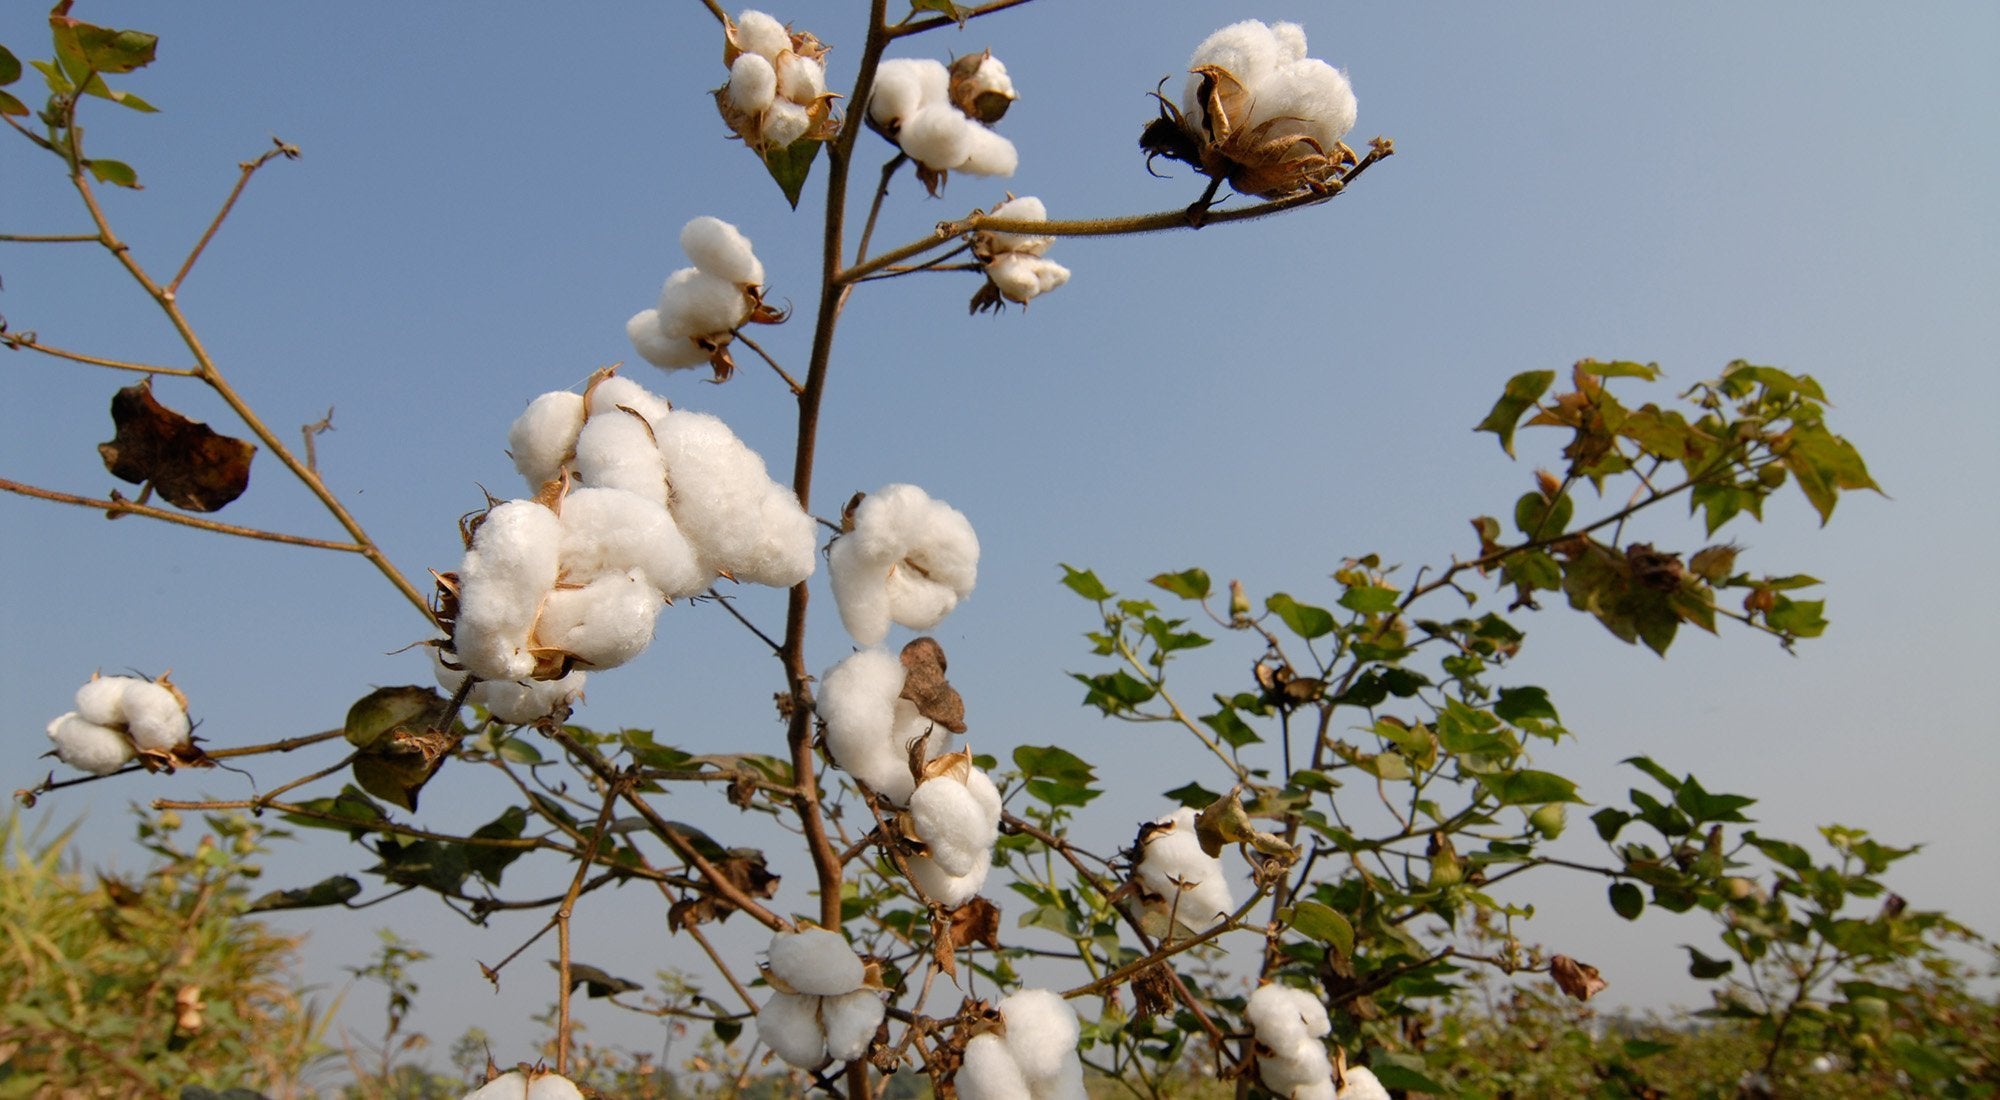 The advantages of organic cotton